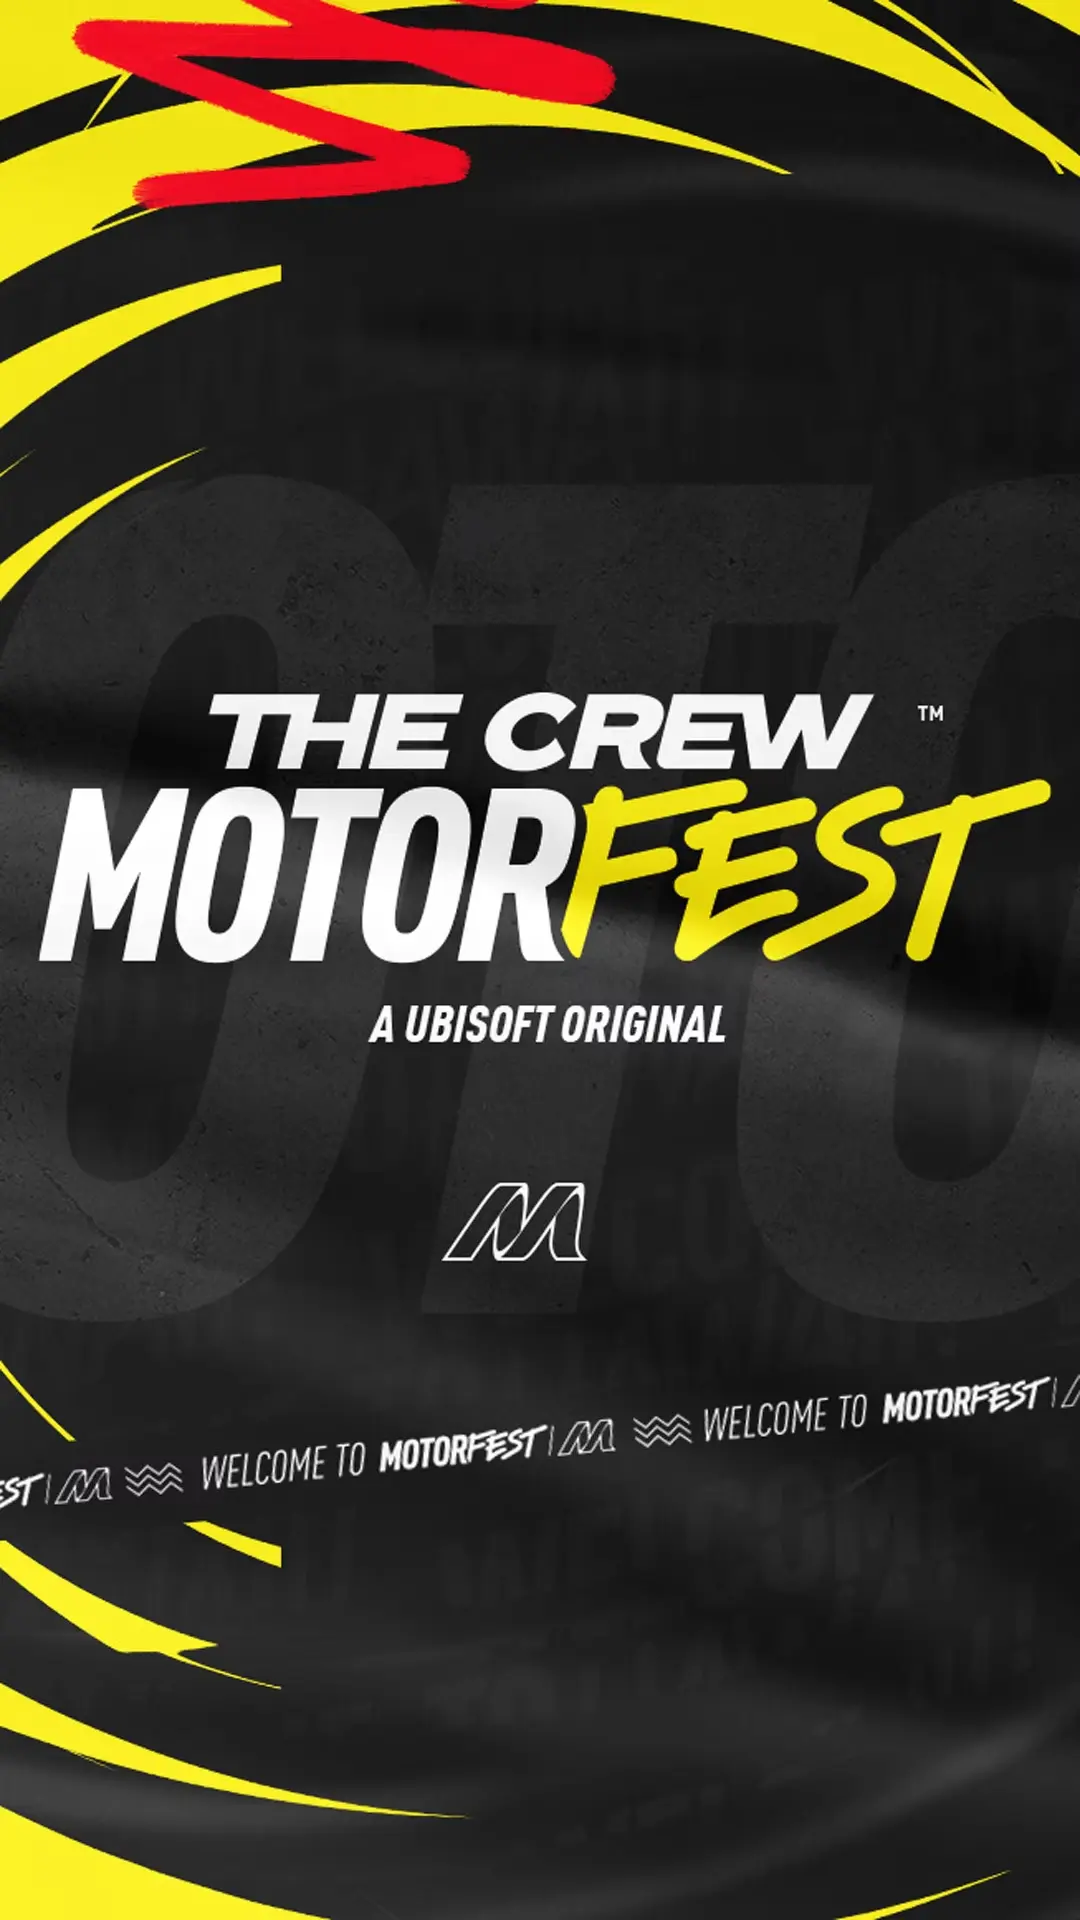 The Crew Motorfest cover